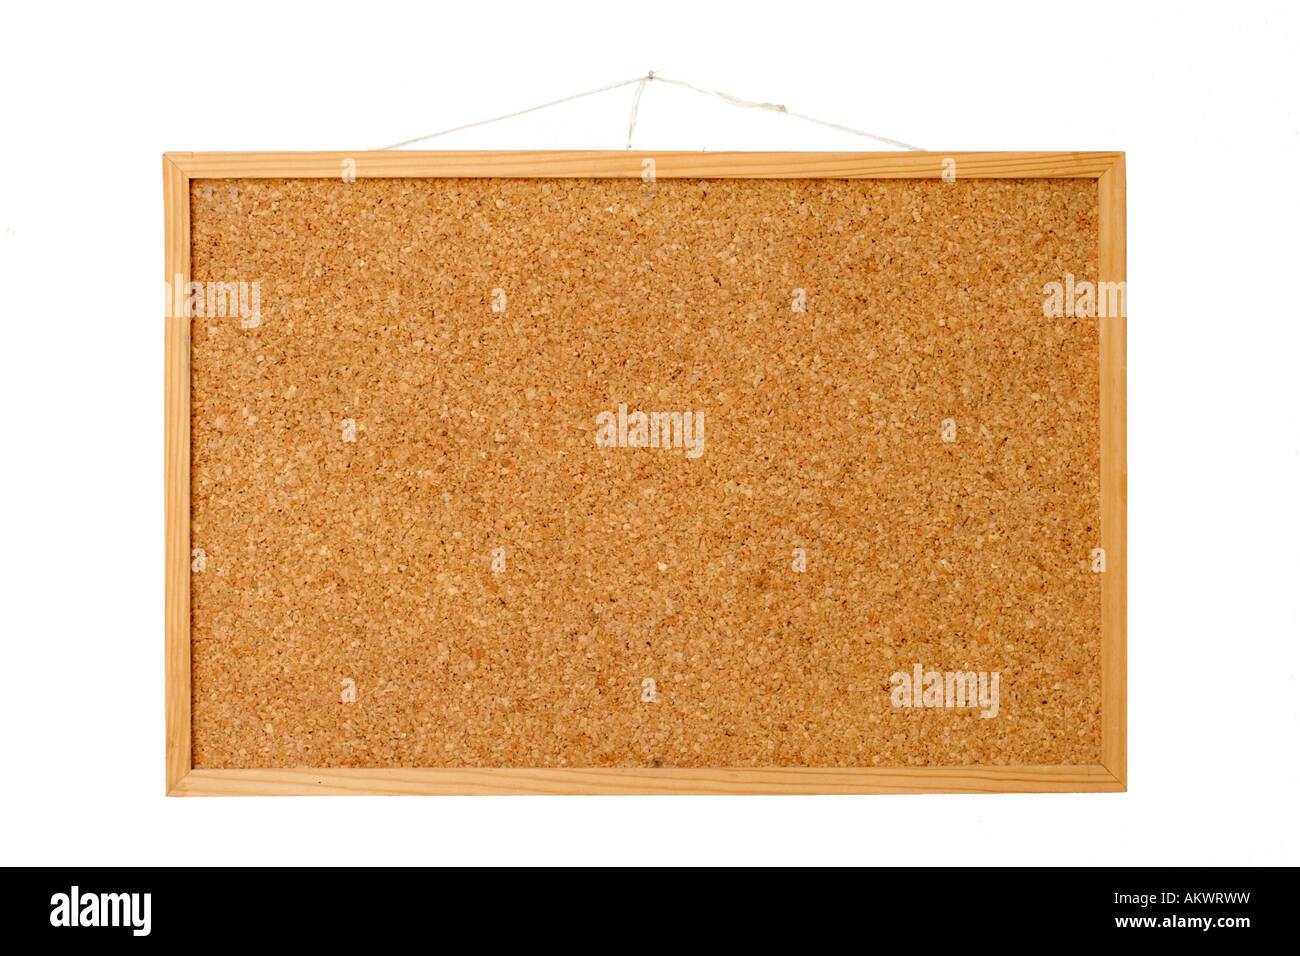 How To Make A Stenciled DIY Cork Board - Full Tutorial